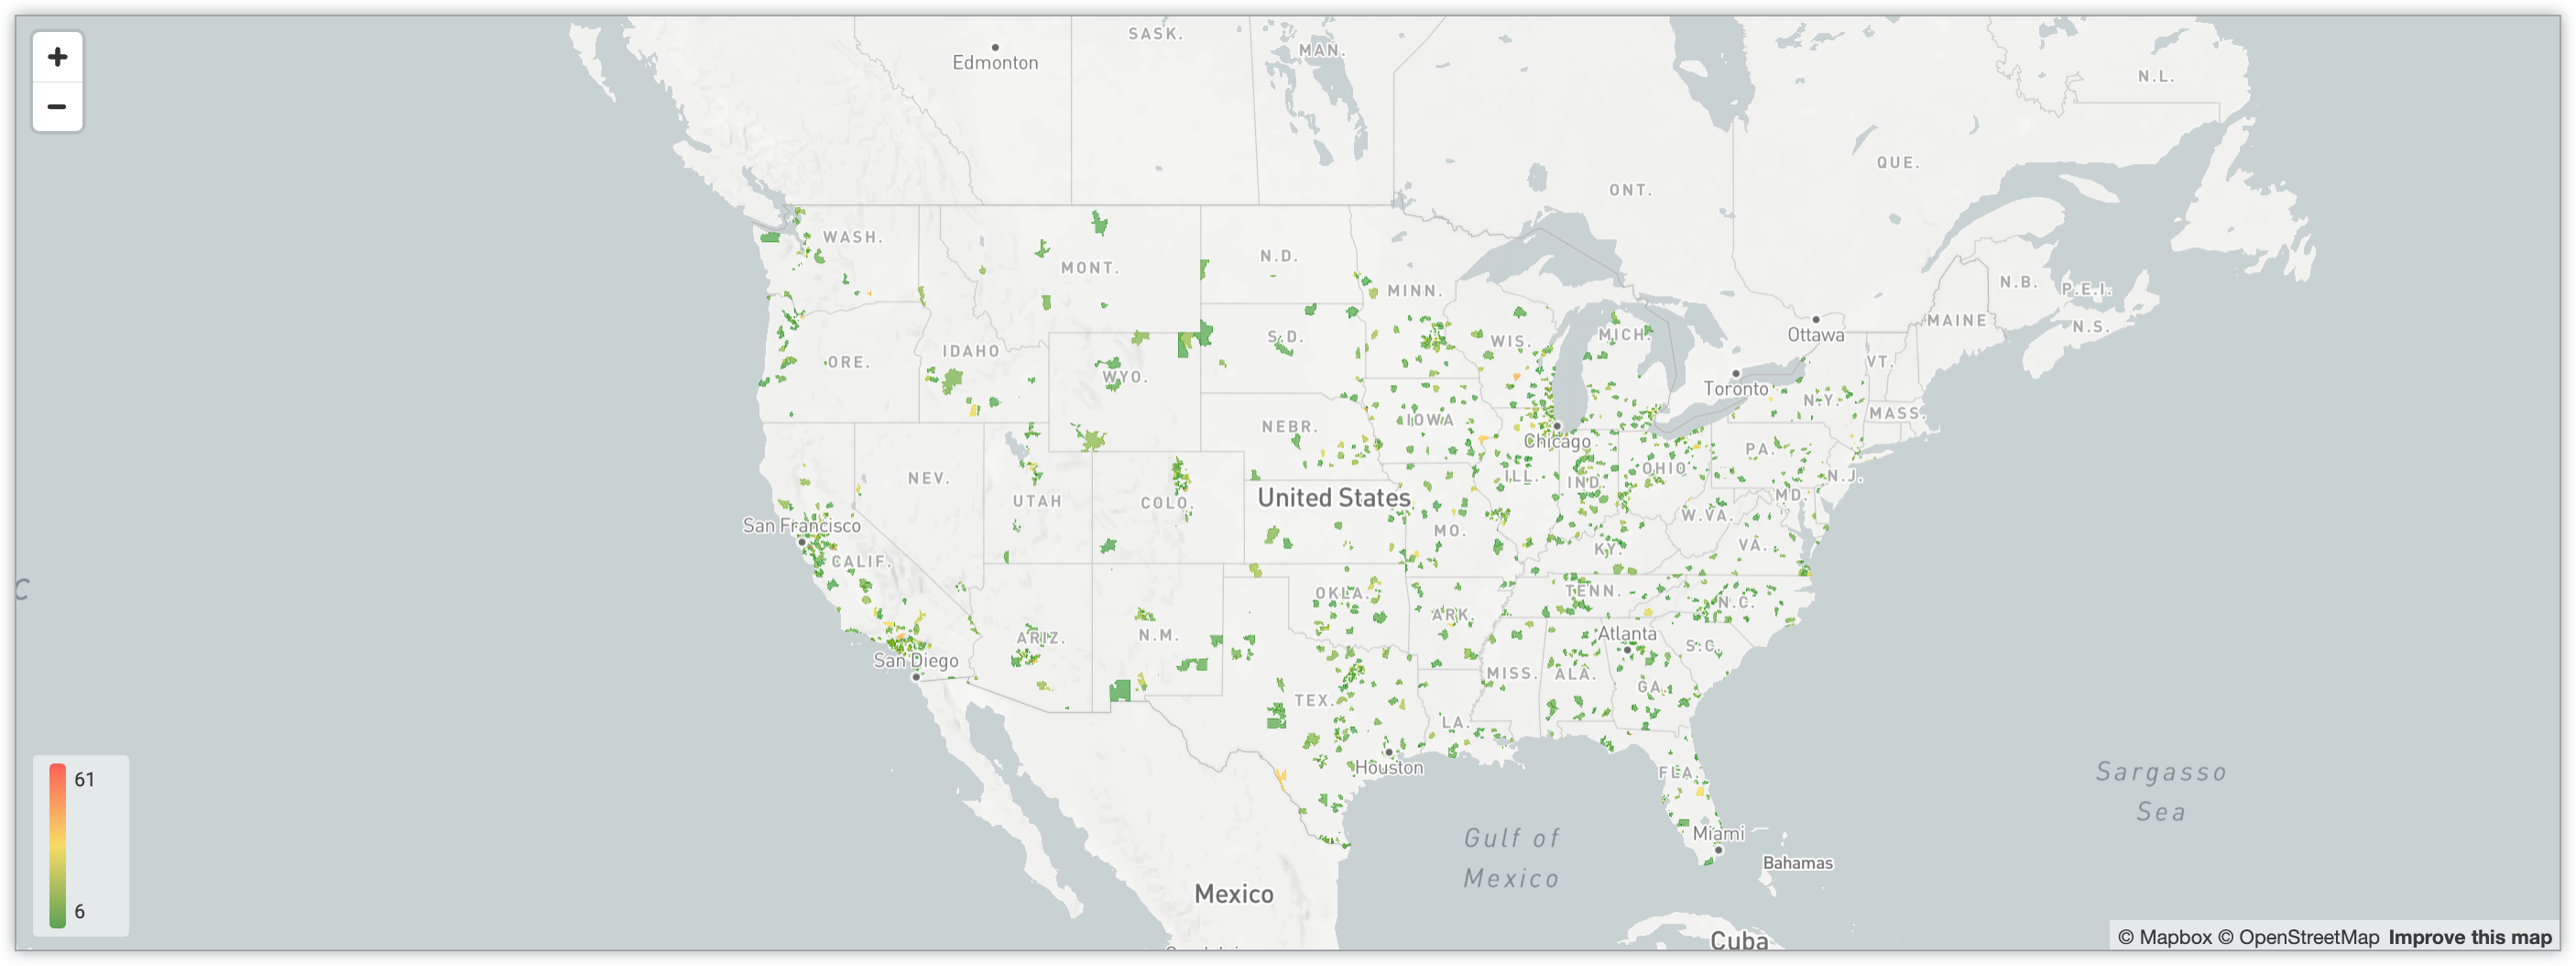 Peta interaktif yang menampilkan jumlah pengguna di seluruh kode pos di Amerika Serikat melalui sistem kode warna gradien.